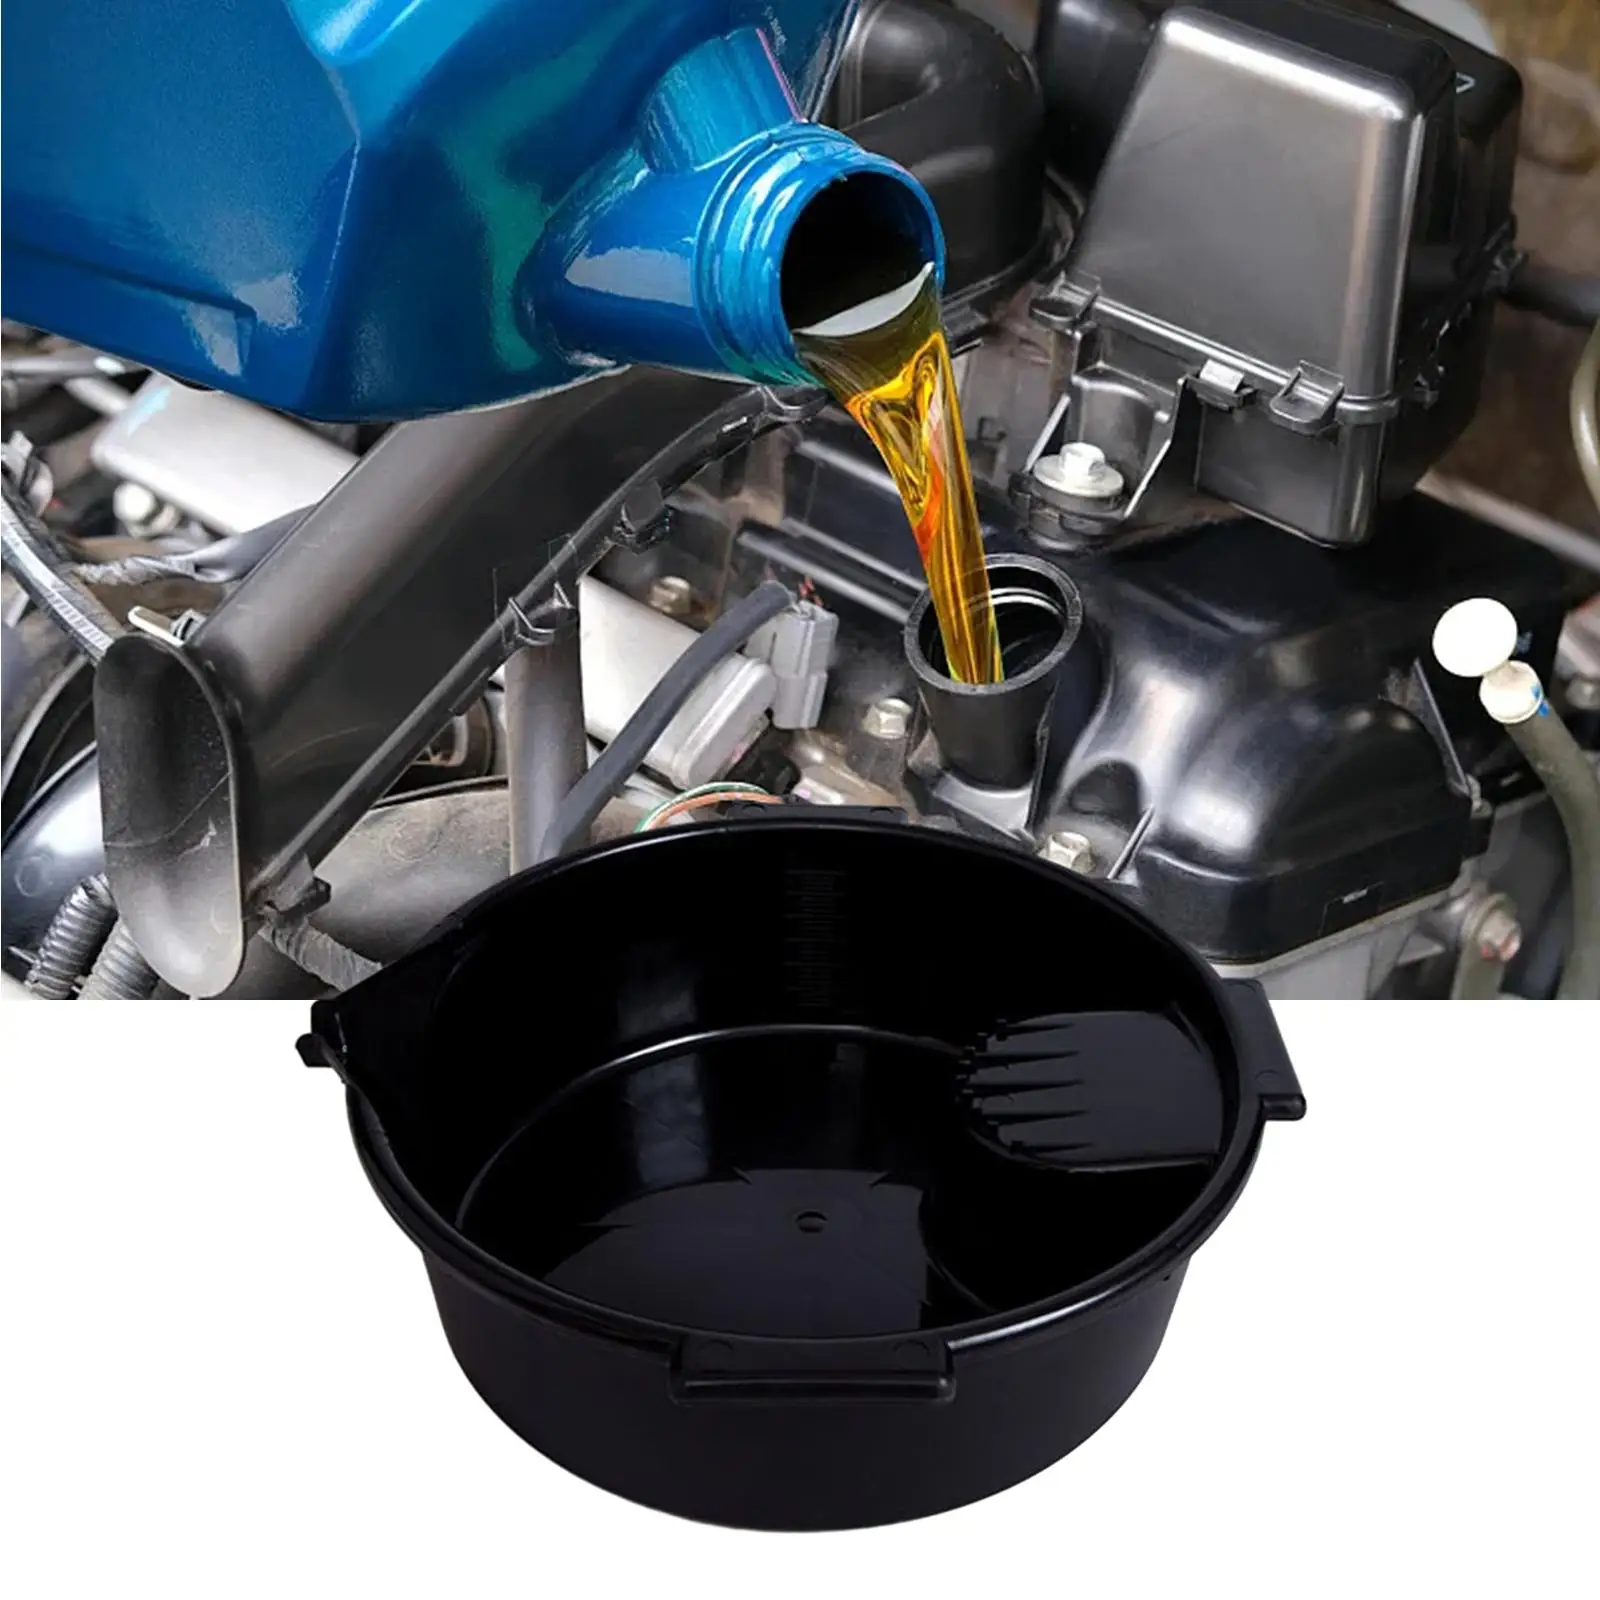 Drain Pan Oil Change Pan, 8L Capacity, Prevents Spills Lightweight Leak Proof